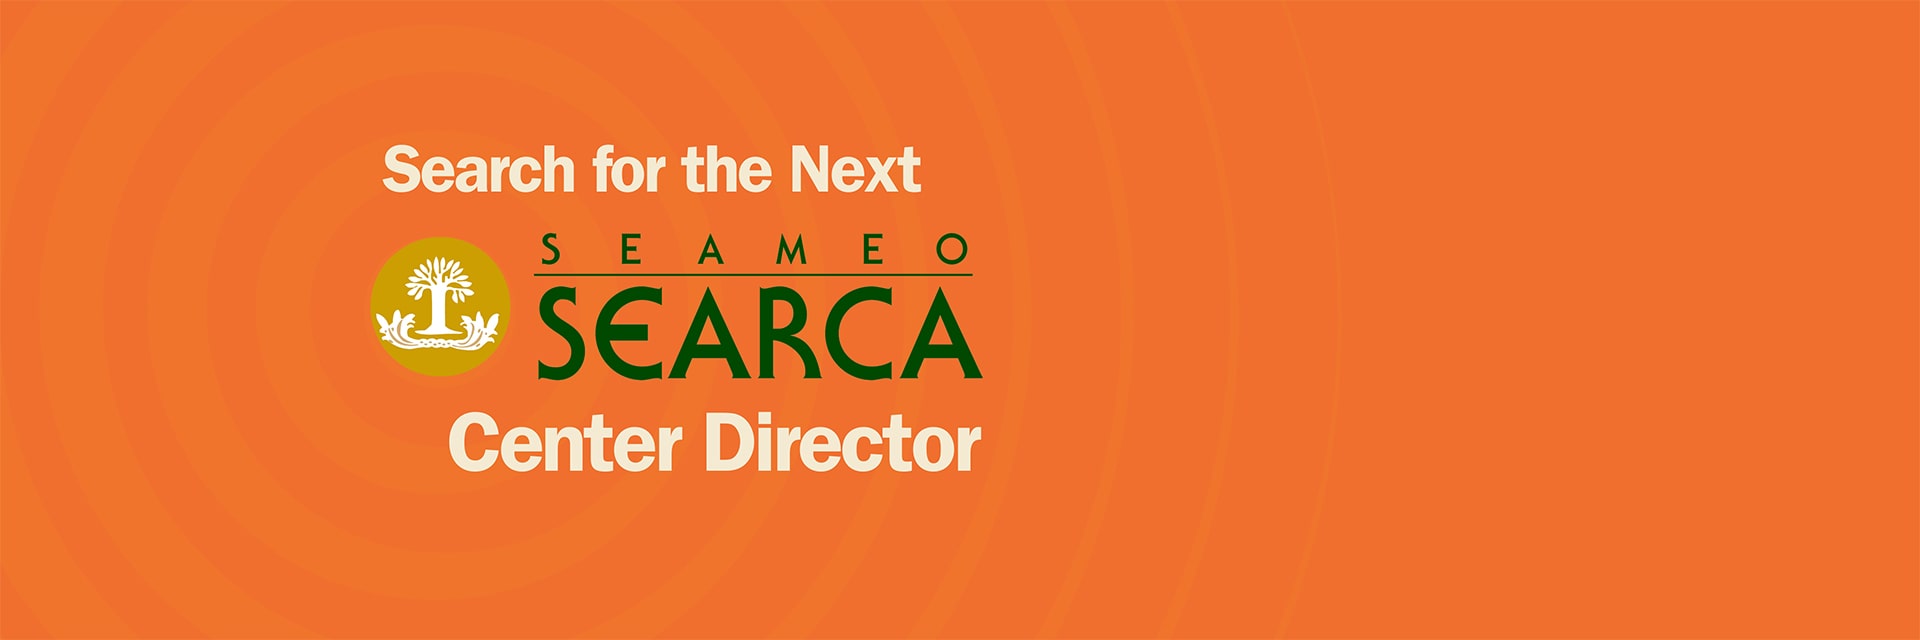 Search for the next SEAMEO SEARCA Center Director